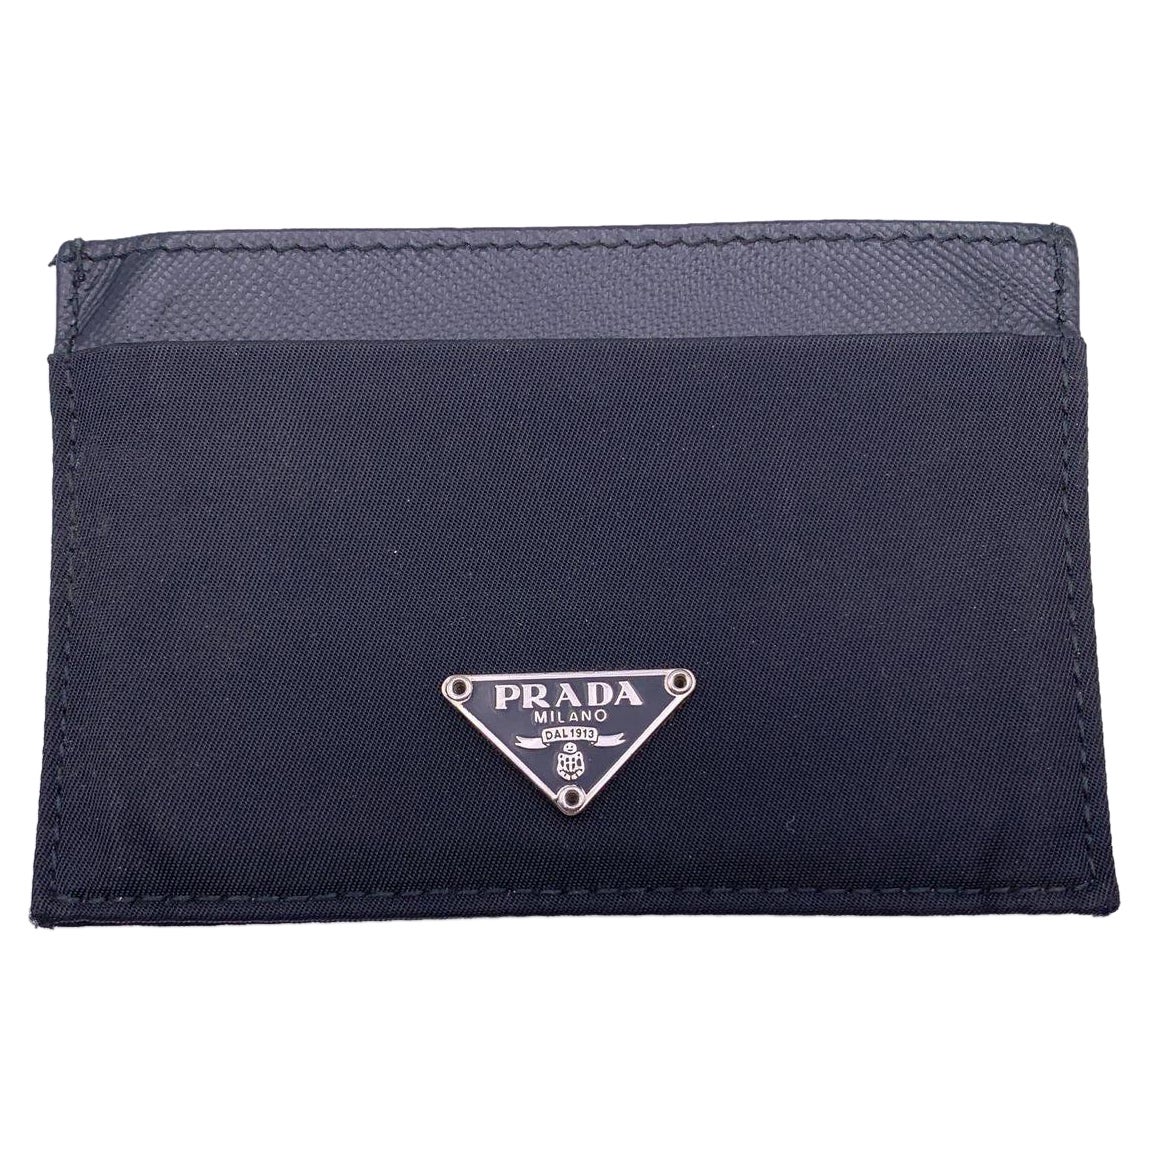 Prada Black Saffiano Leather and Nylon Card Holder Wallet